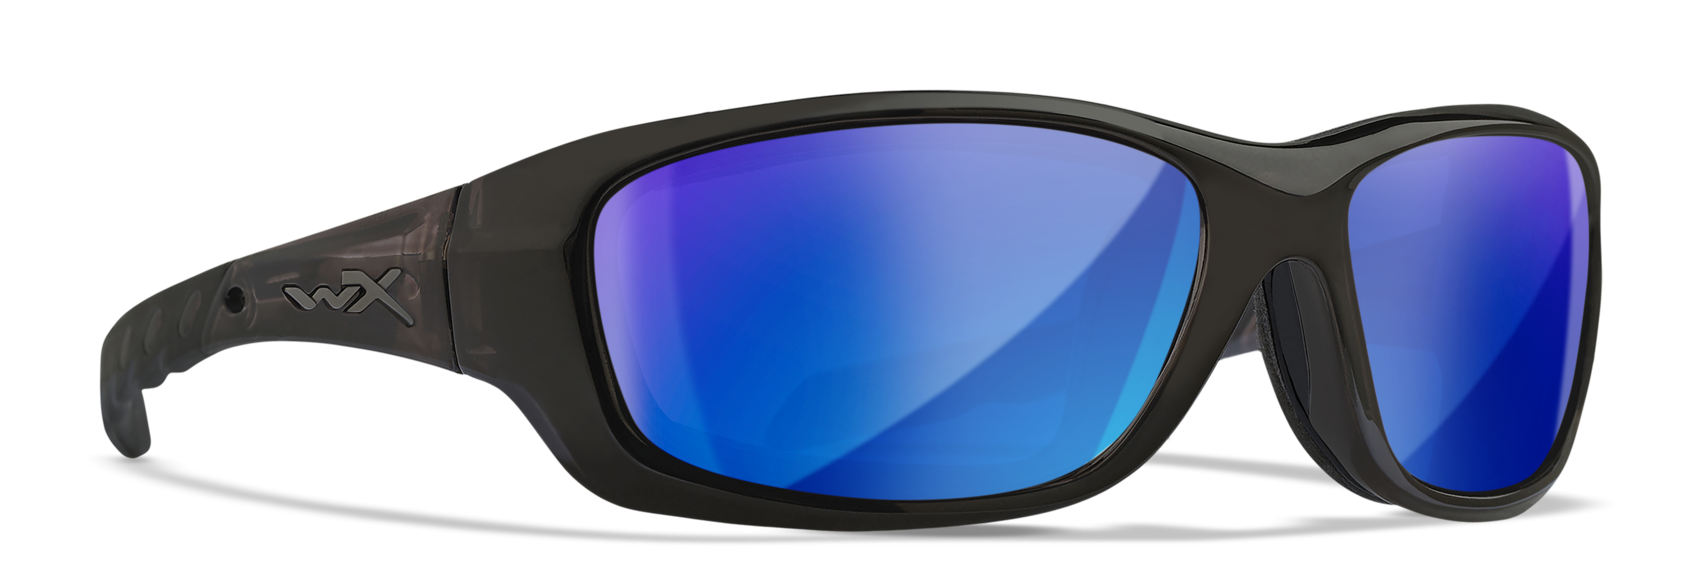 Wiley X WX Gravity Blue Mirror Polycarbonate Sunglasses